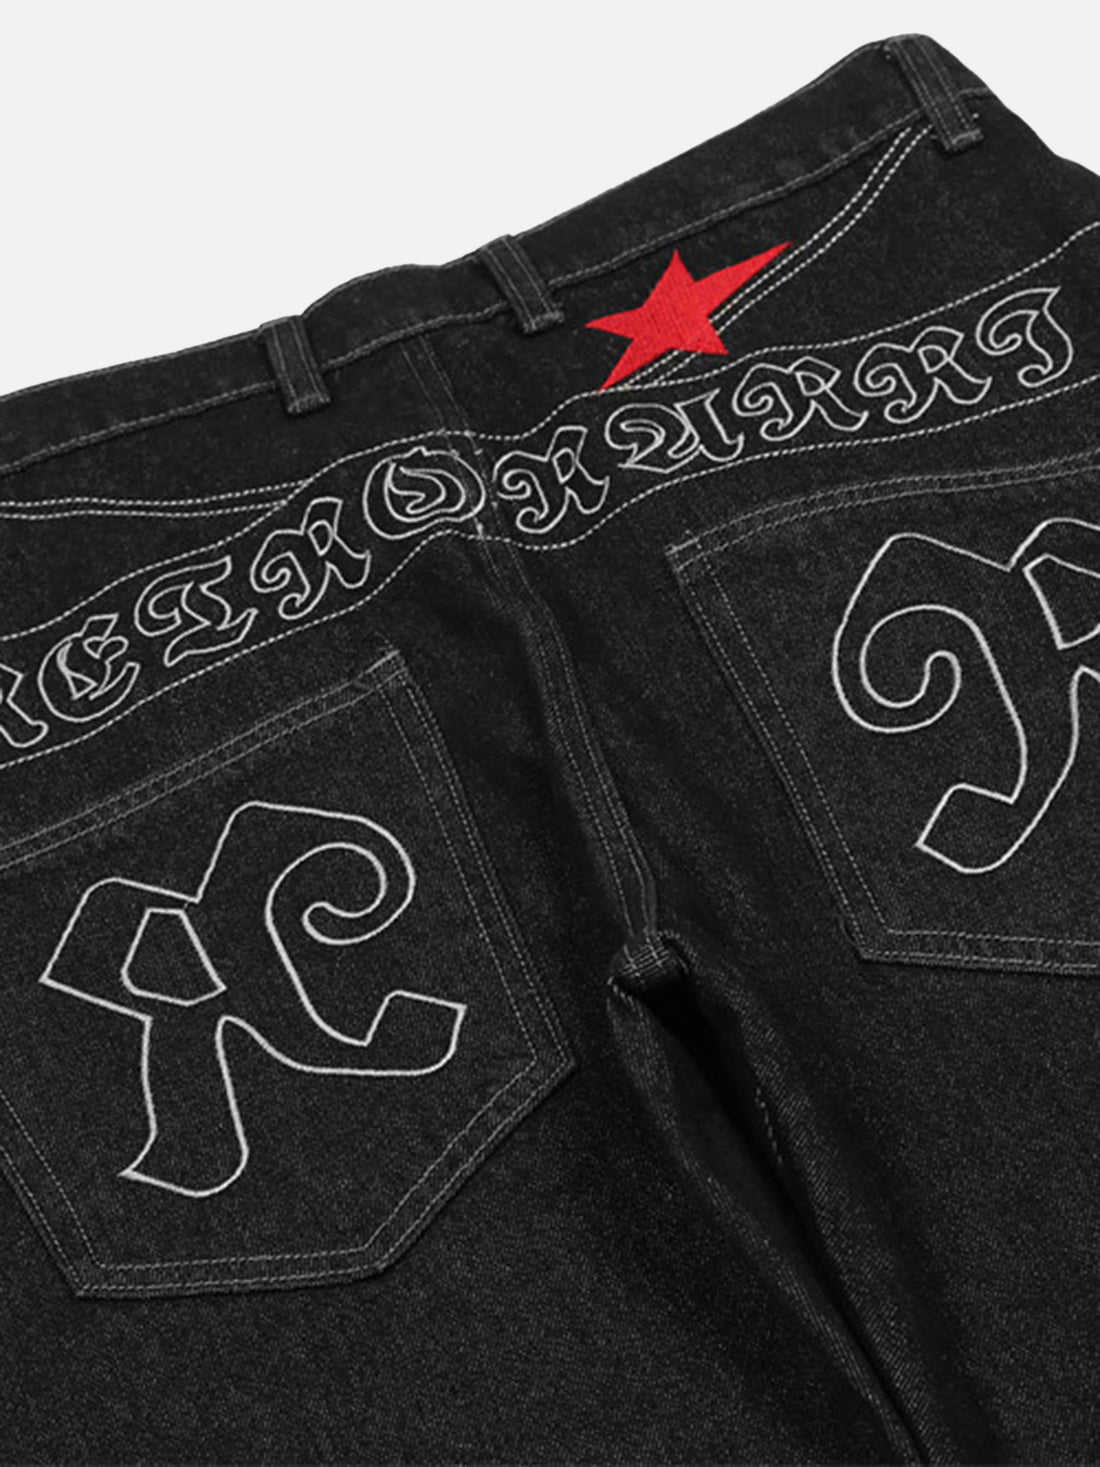 STAR - Regular Embroidered Jeans